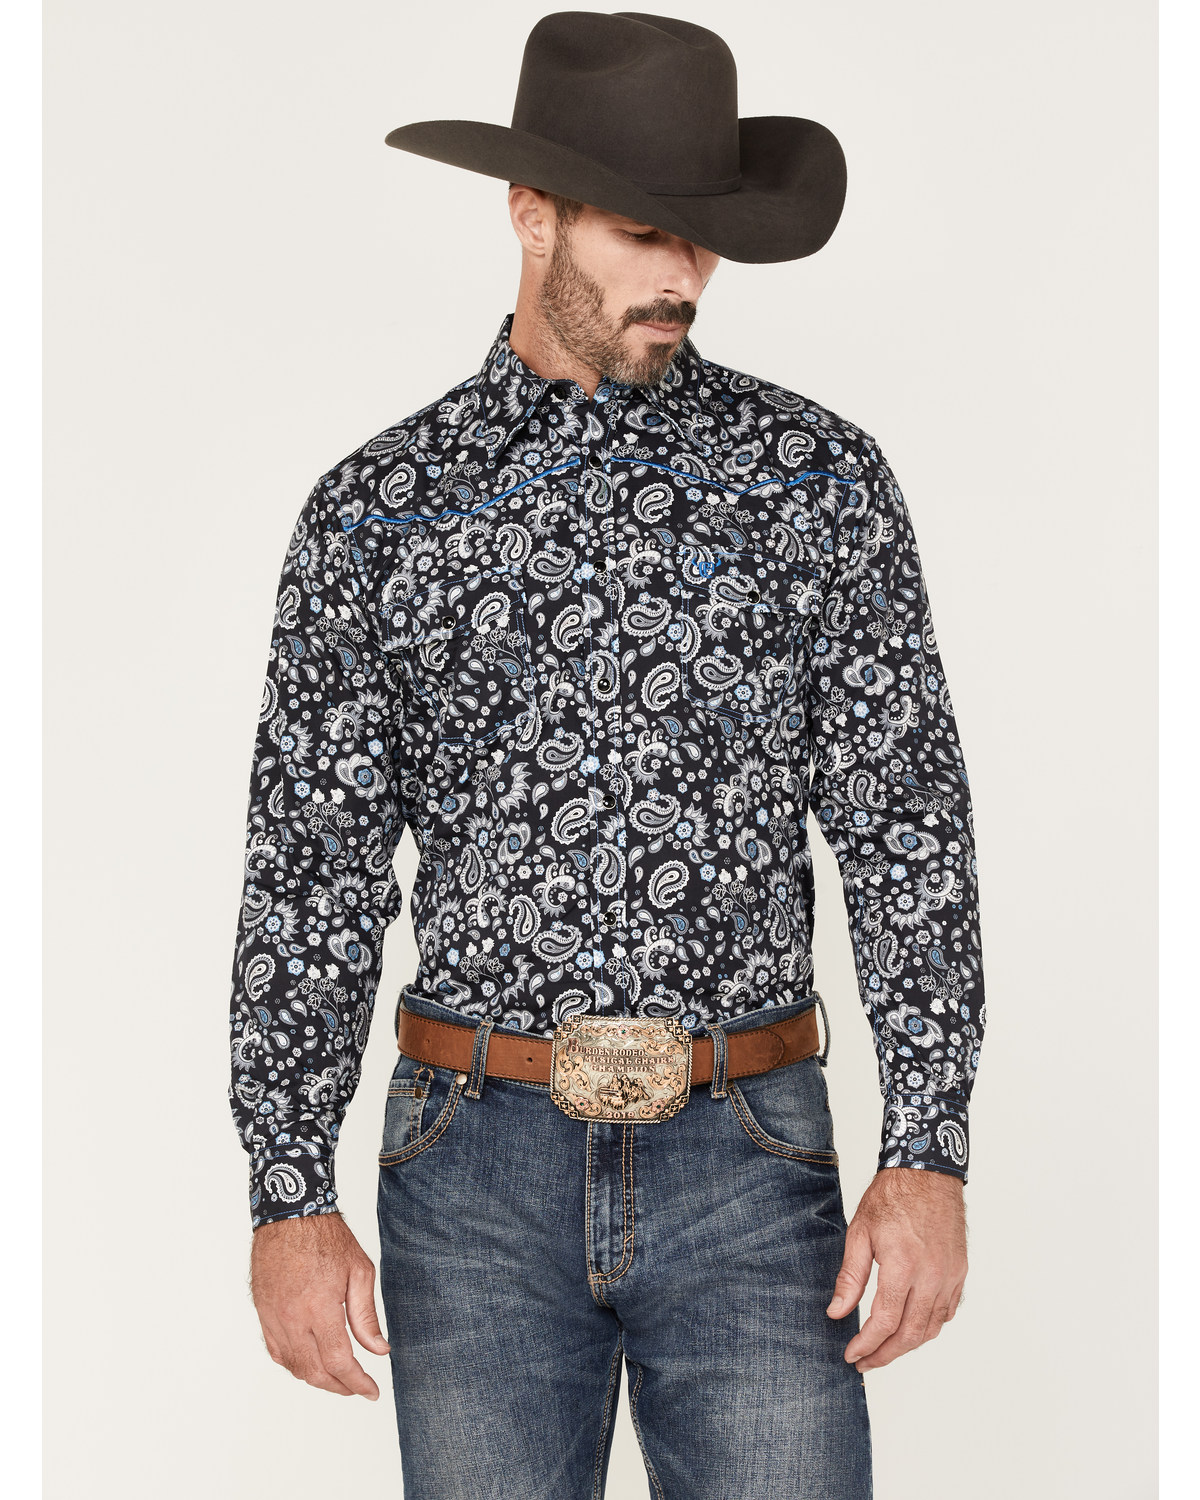 Cowboy Hardware Men's Paisley Print Snap Western Shirt